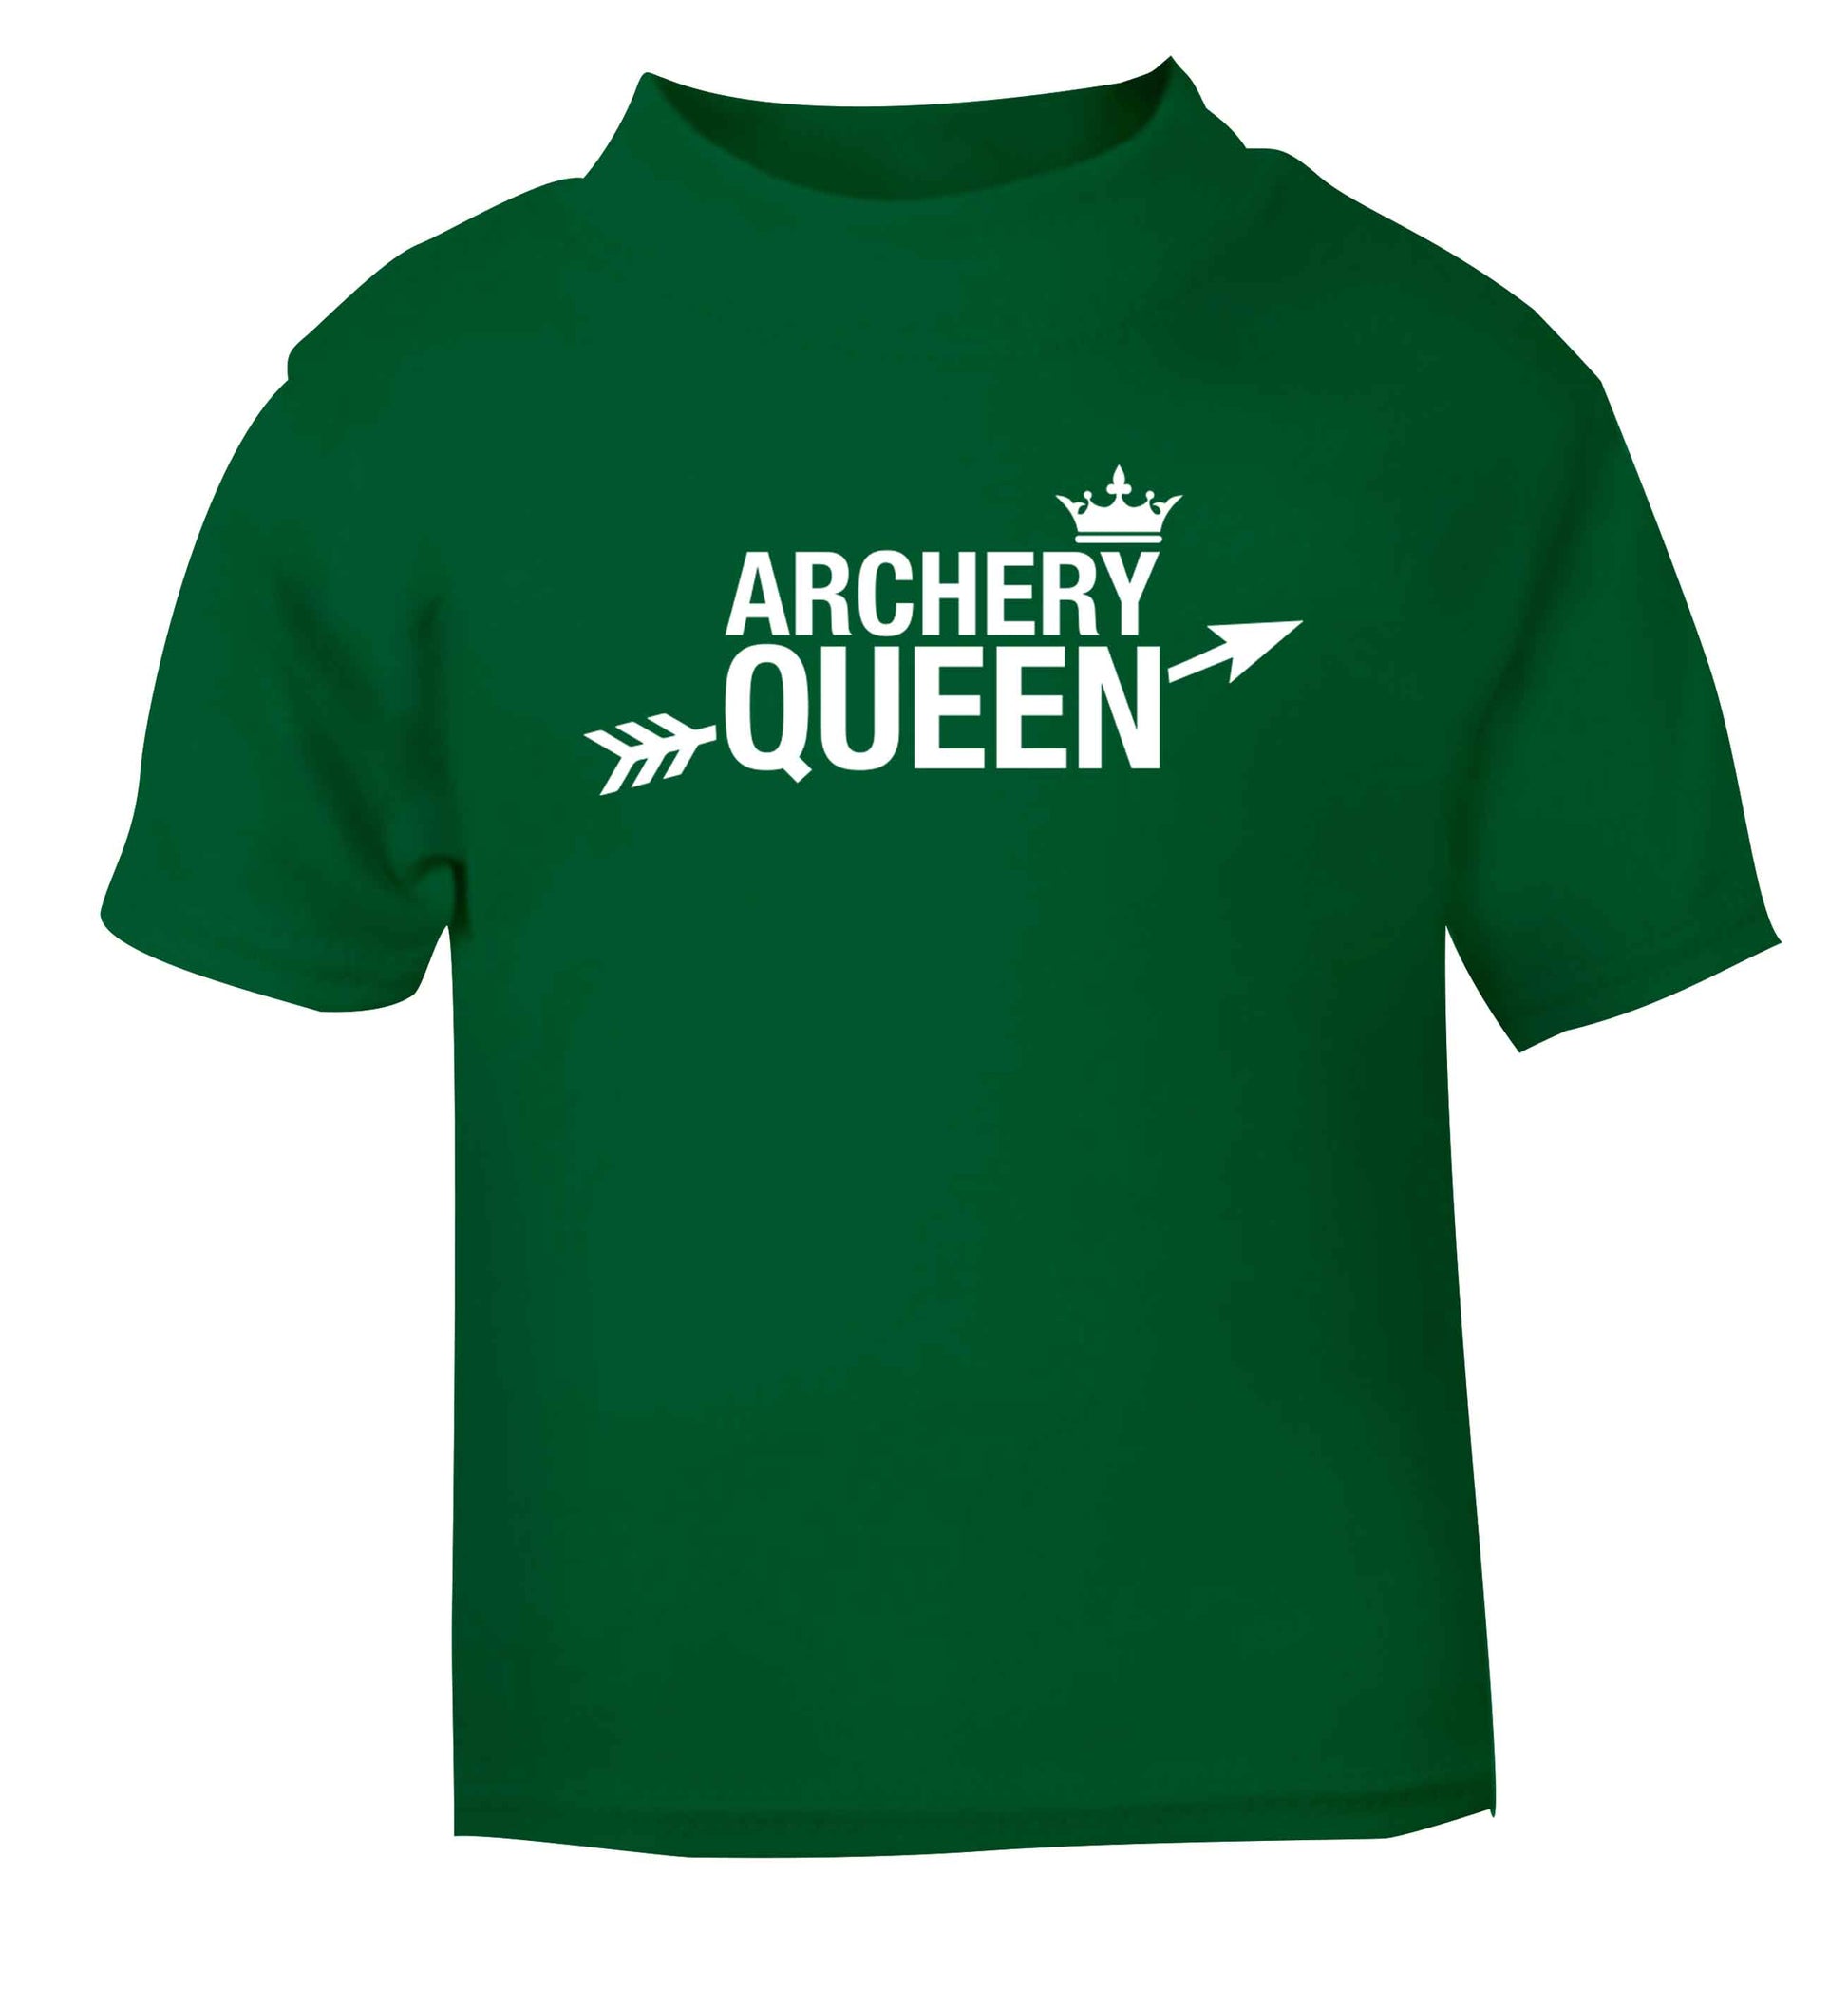 Archery queen green Baby Toddler Tshirt 2 Years